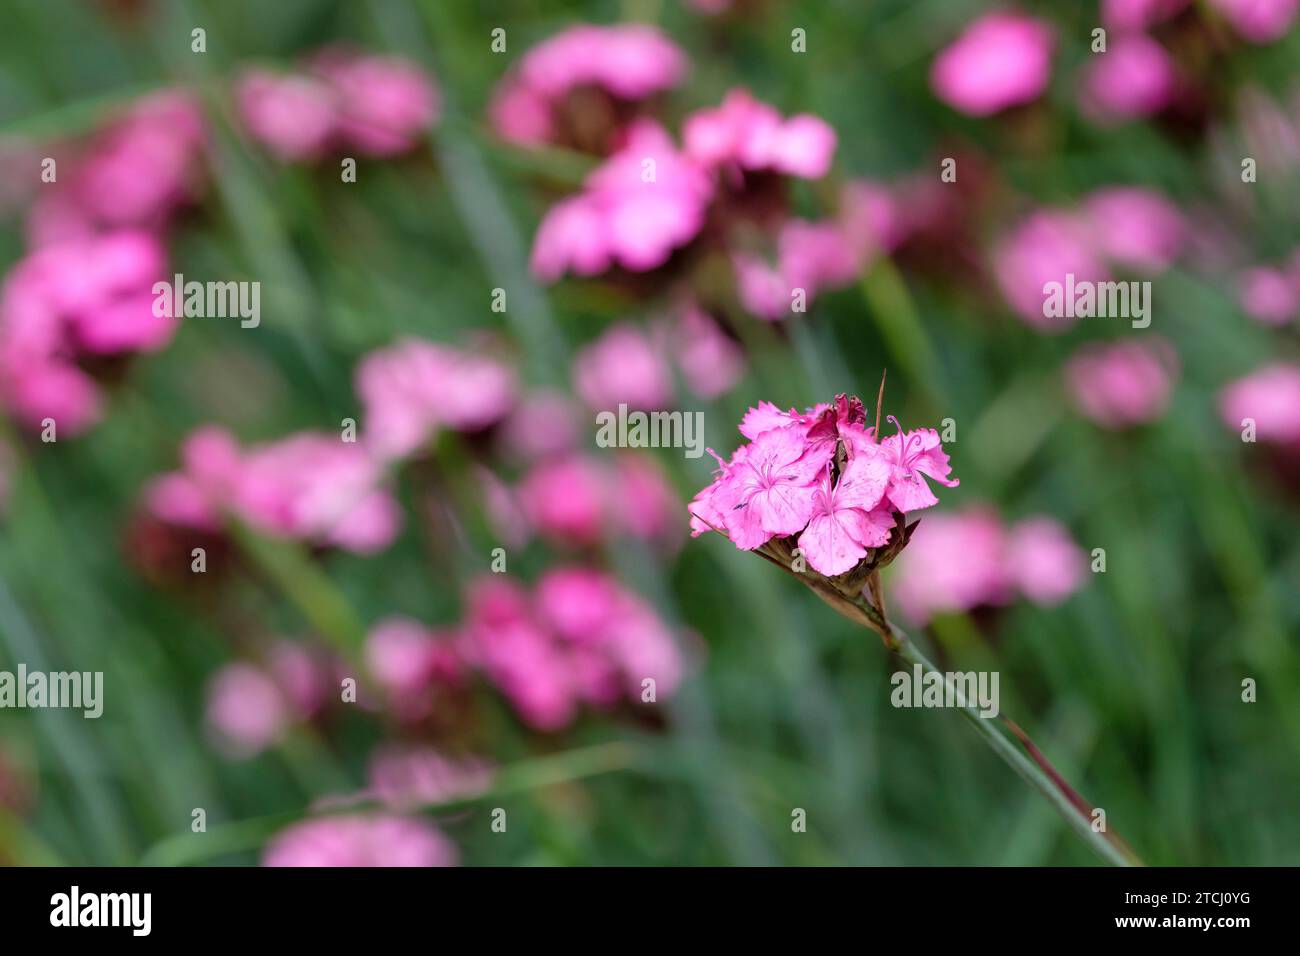 Dianthus carthusianorum, German pink, Dianthus clavatus, reddish magenta flowers in terminal clusters, Stock Photo